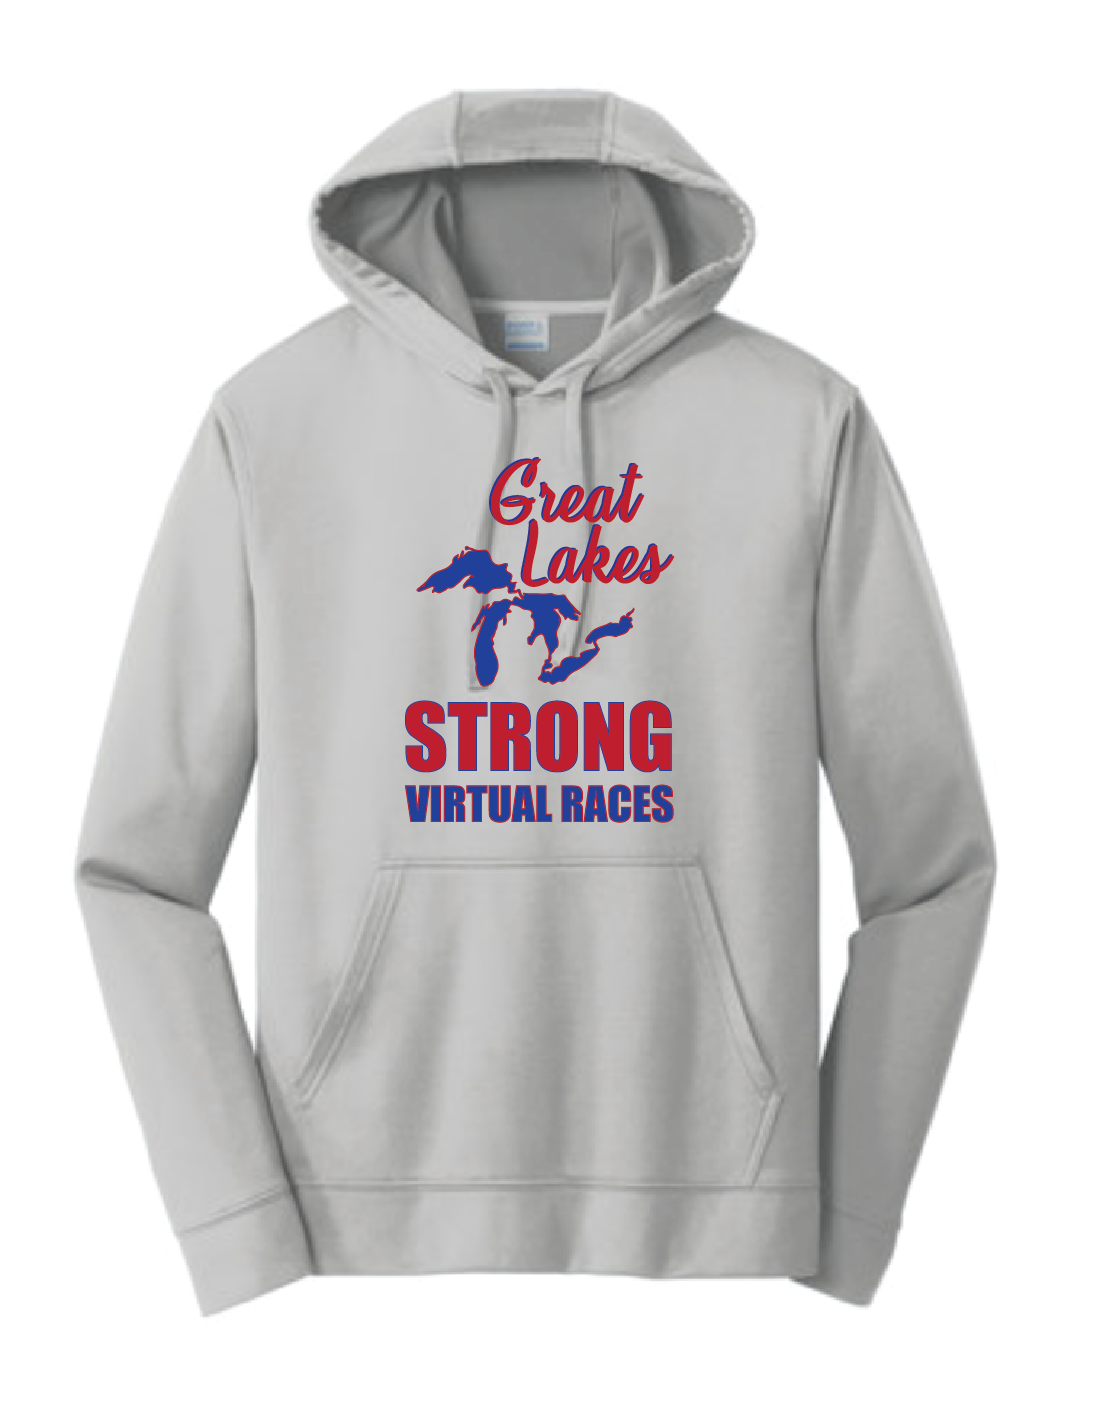 Great Lakes Strong Hooded Sweatshirt